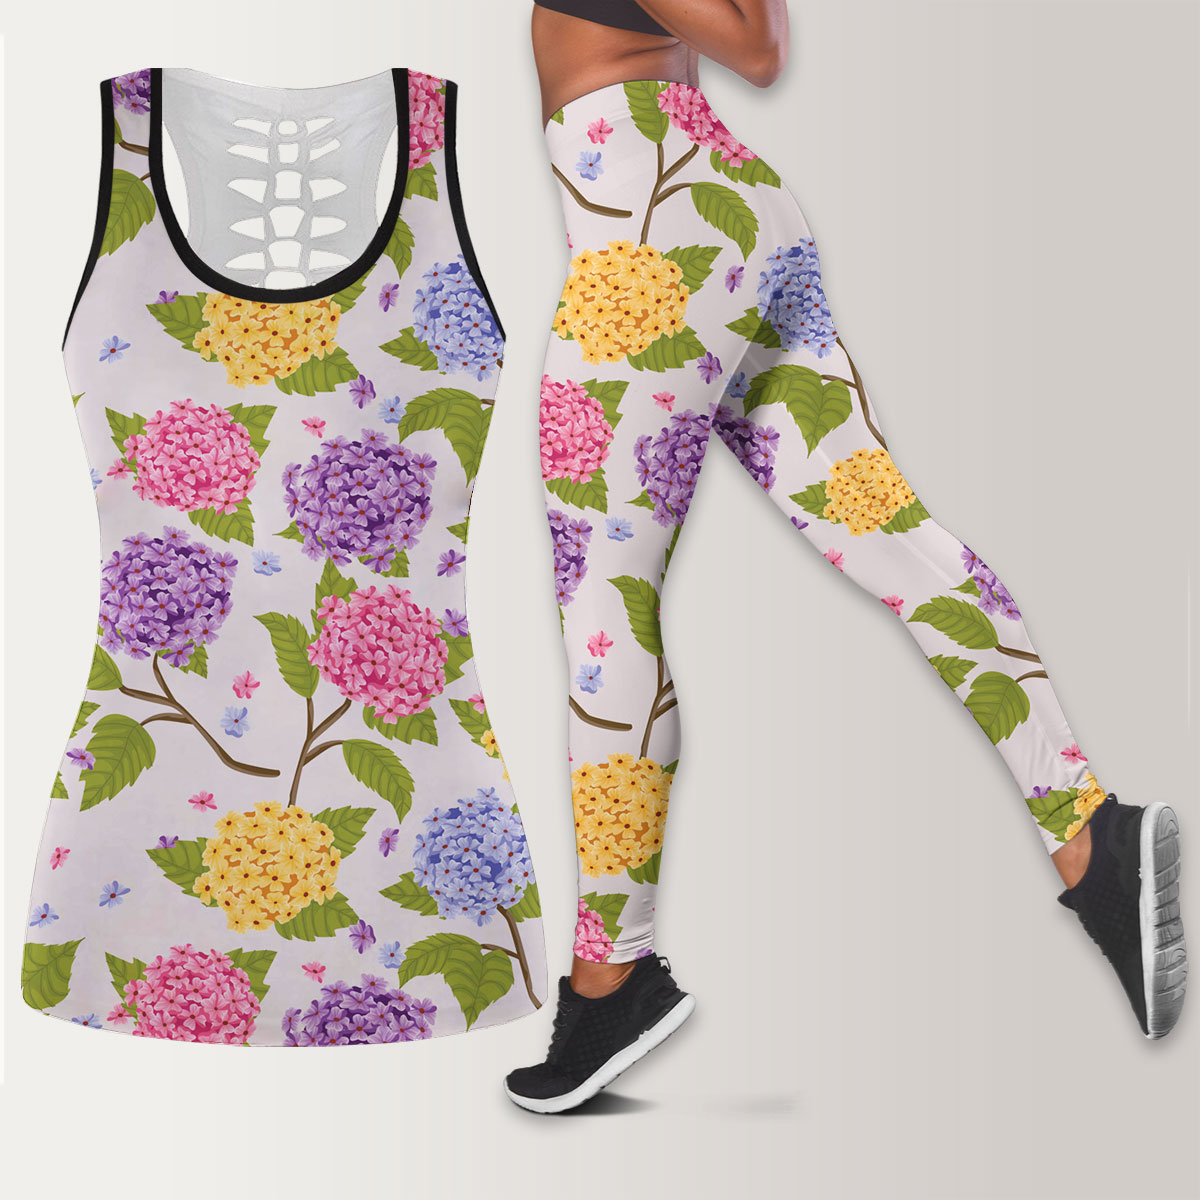 Floral Hydrangea Seamless Pattern Legging Tank Top set